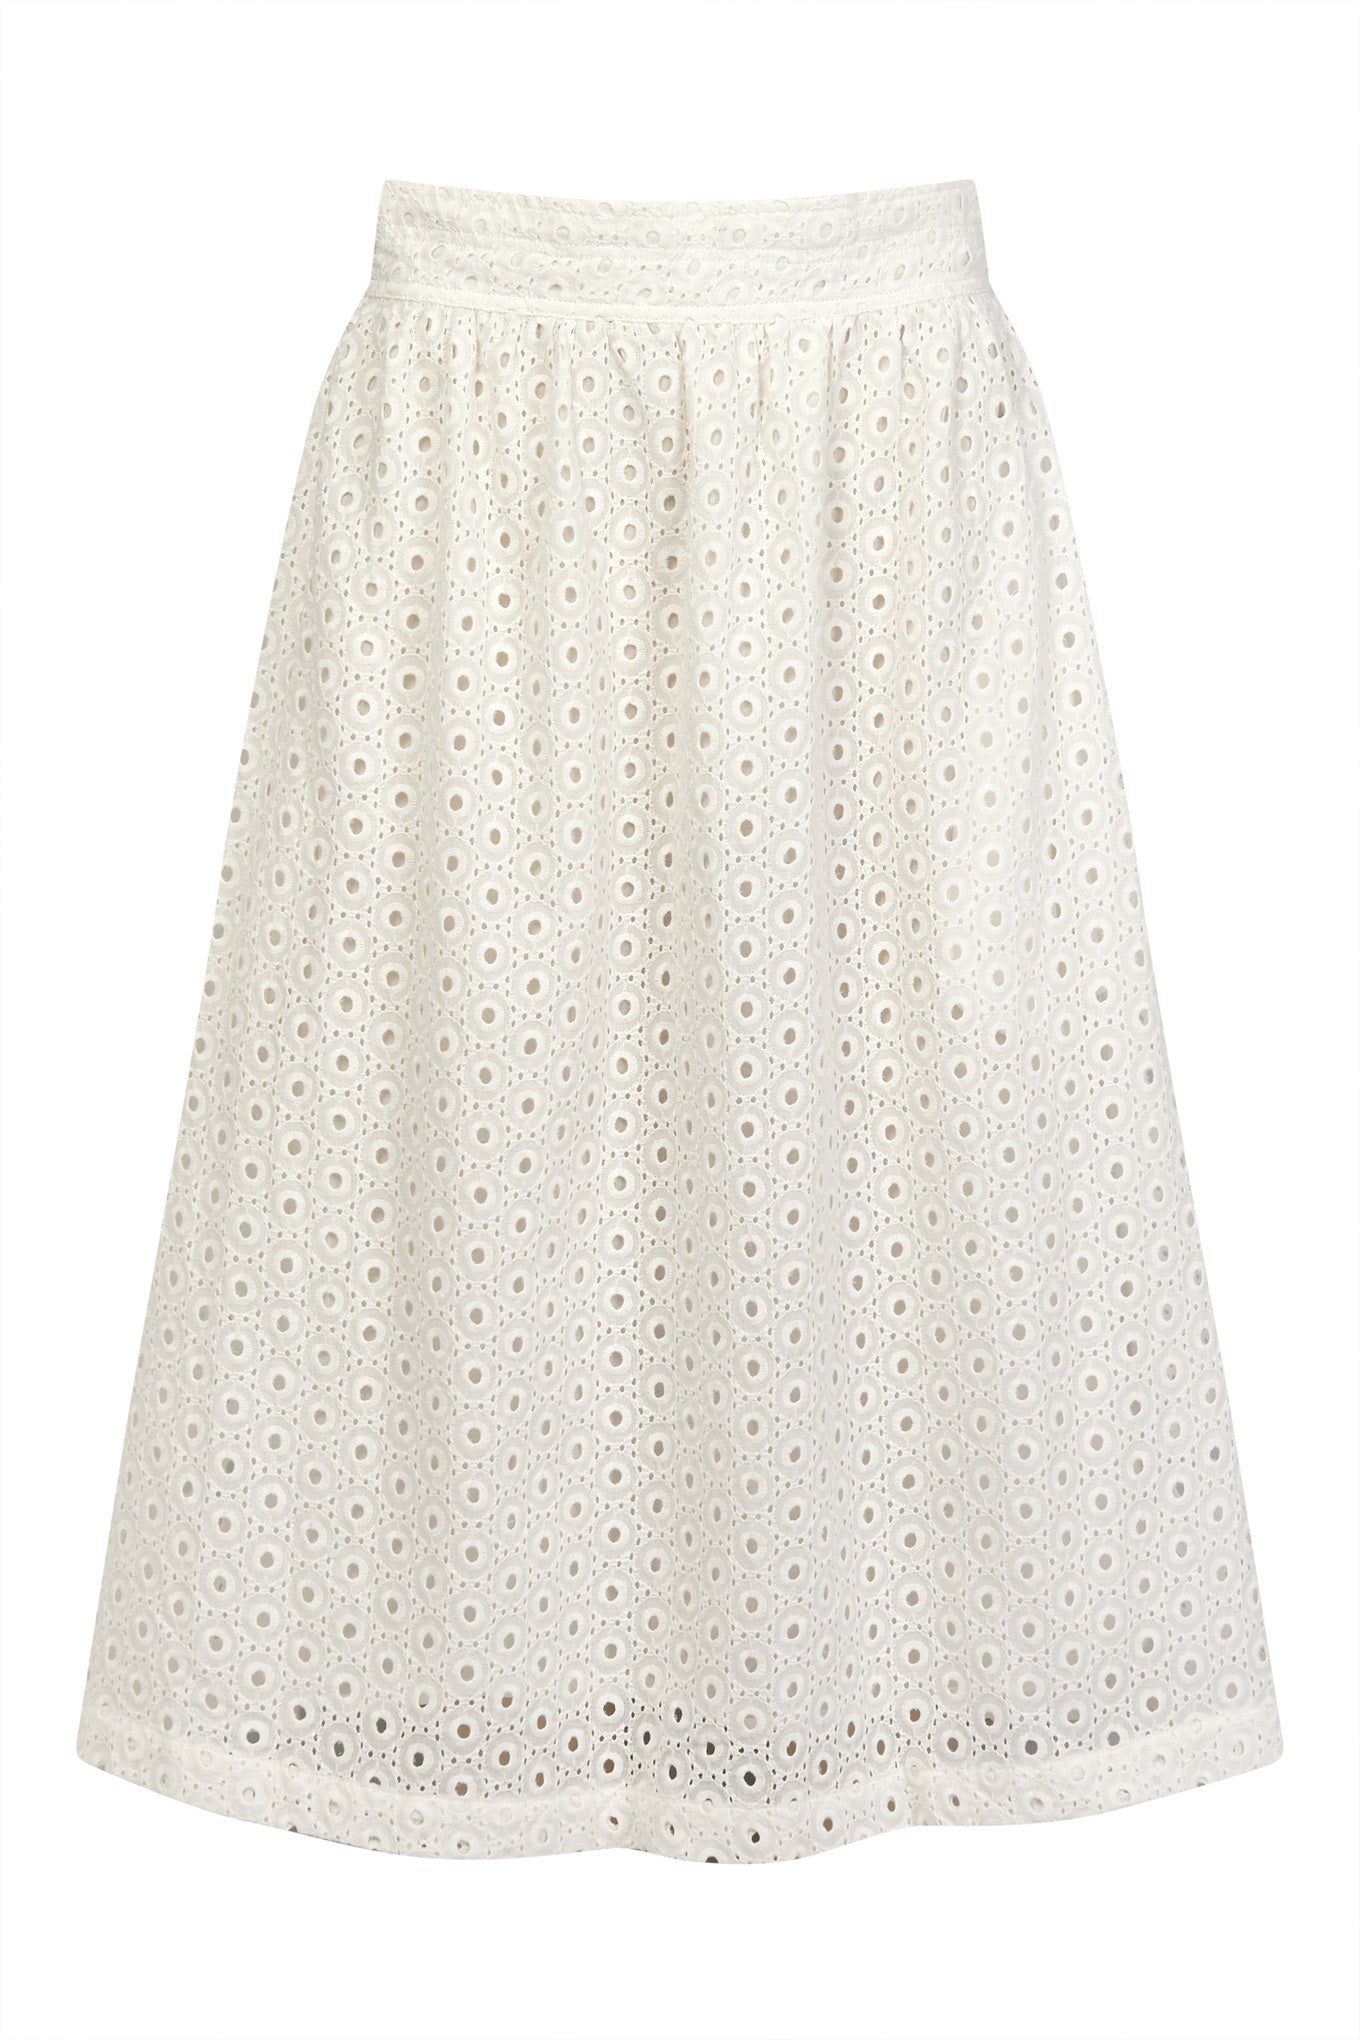 White midi skirt NAMI made from 100% organic cotton by Komodo